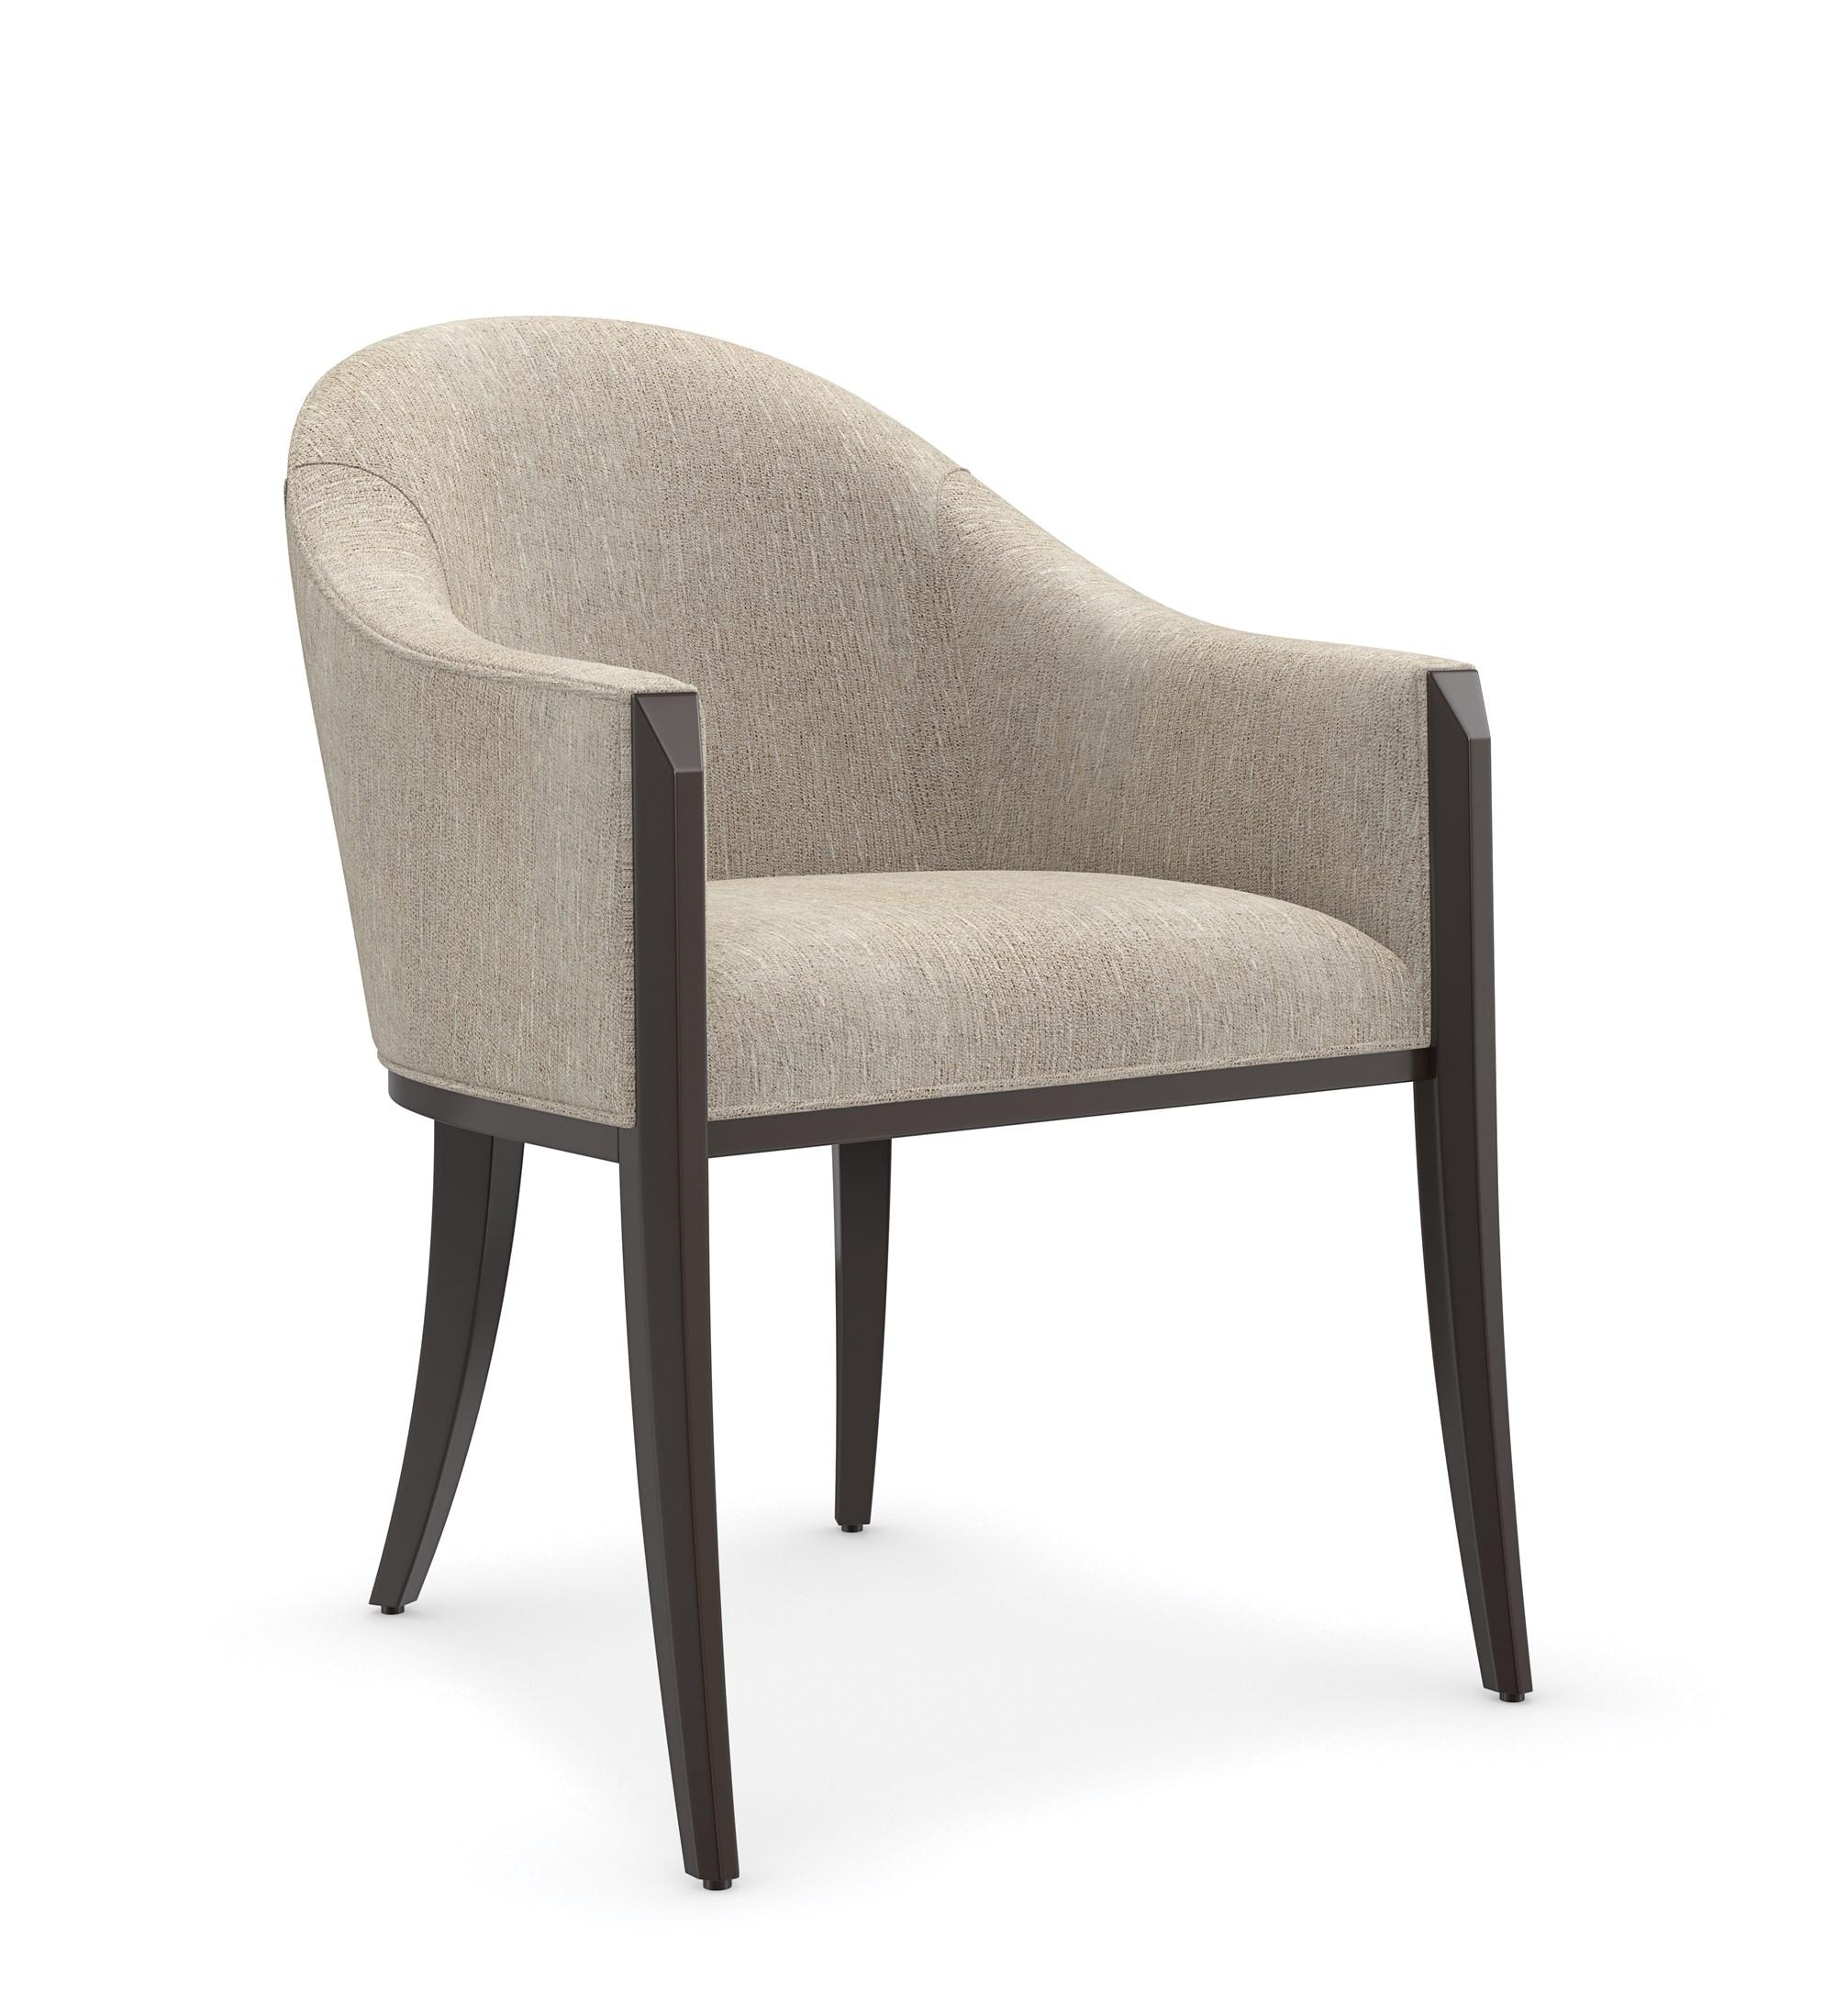 Contemporary Dining Chair Set NEXT COURSE CLA-422-291-Set-2 in Dark Walnut, Beige Fabric